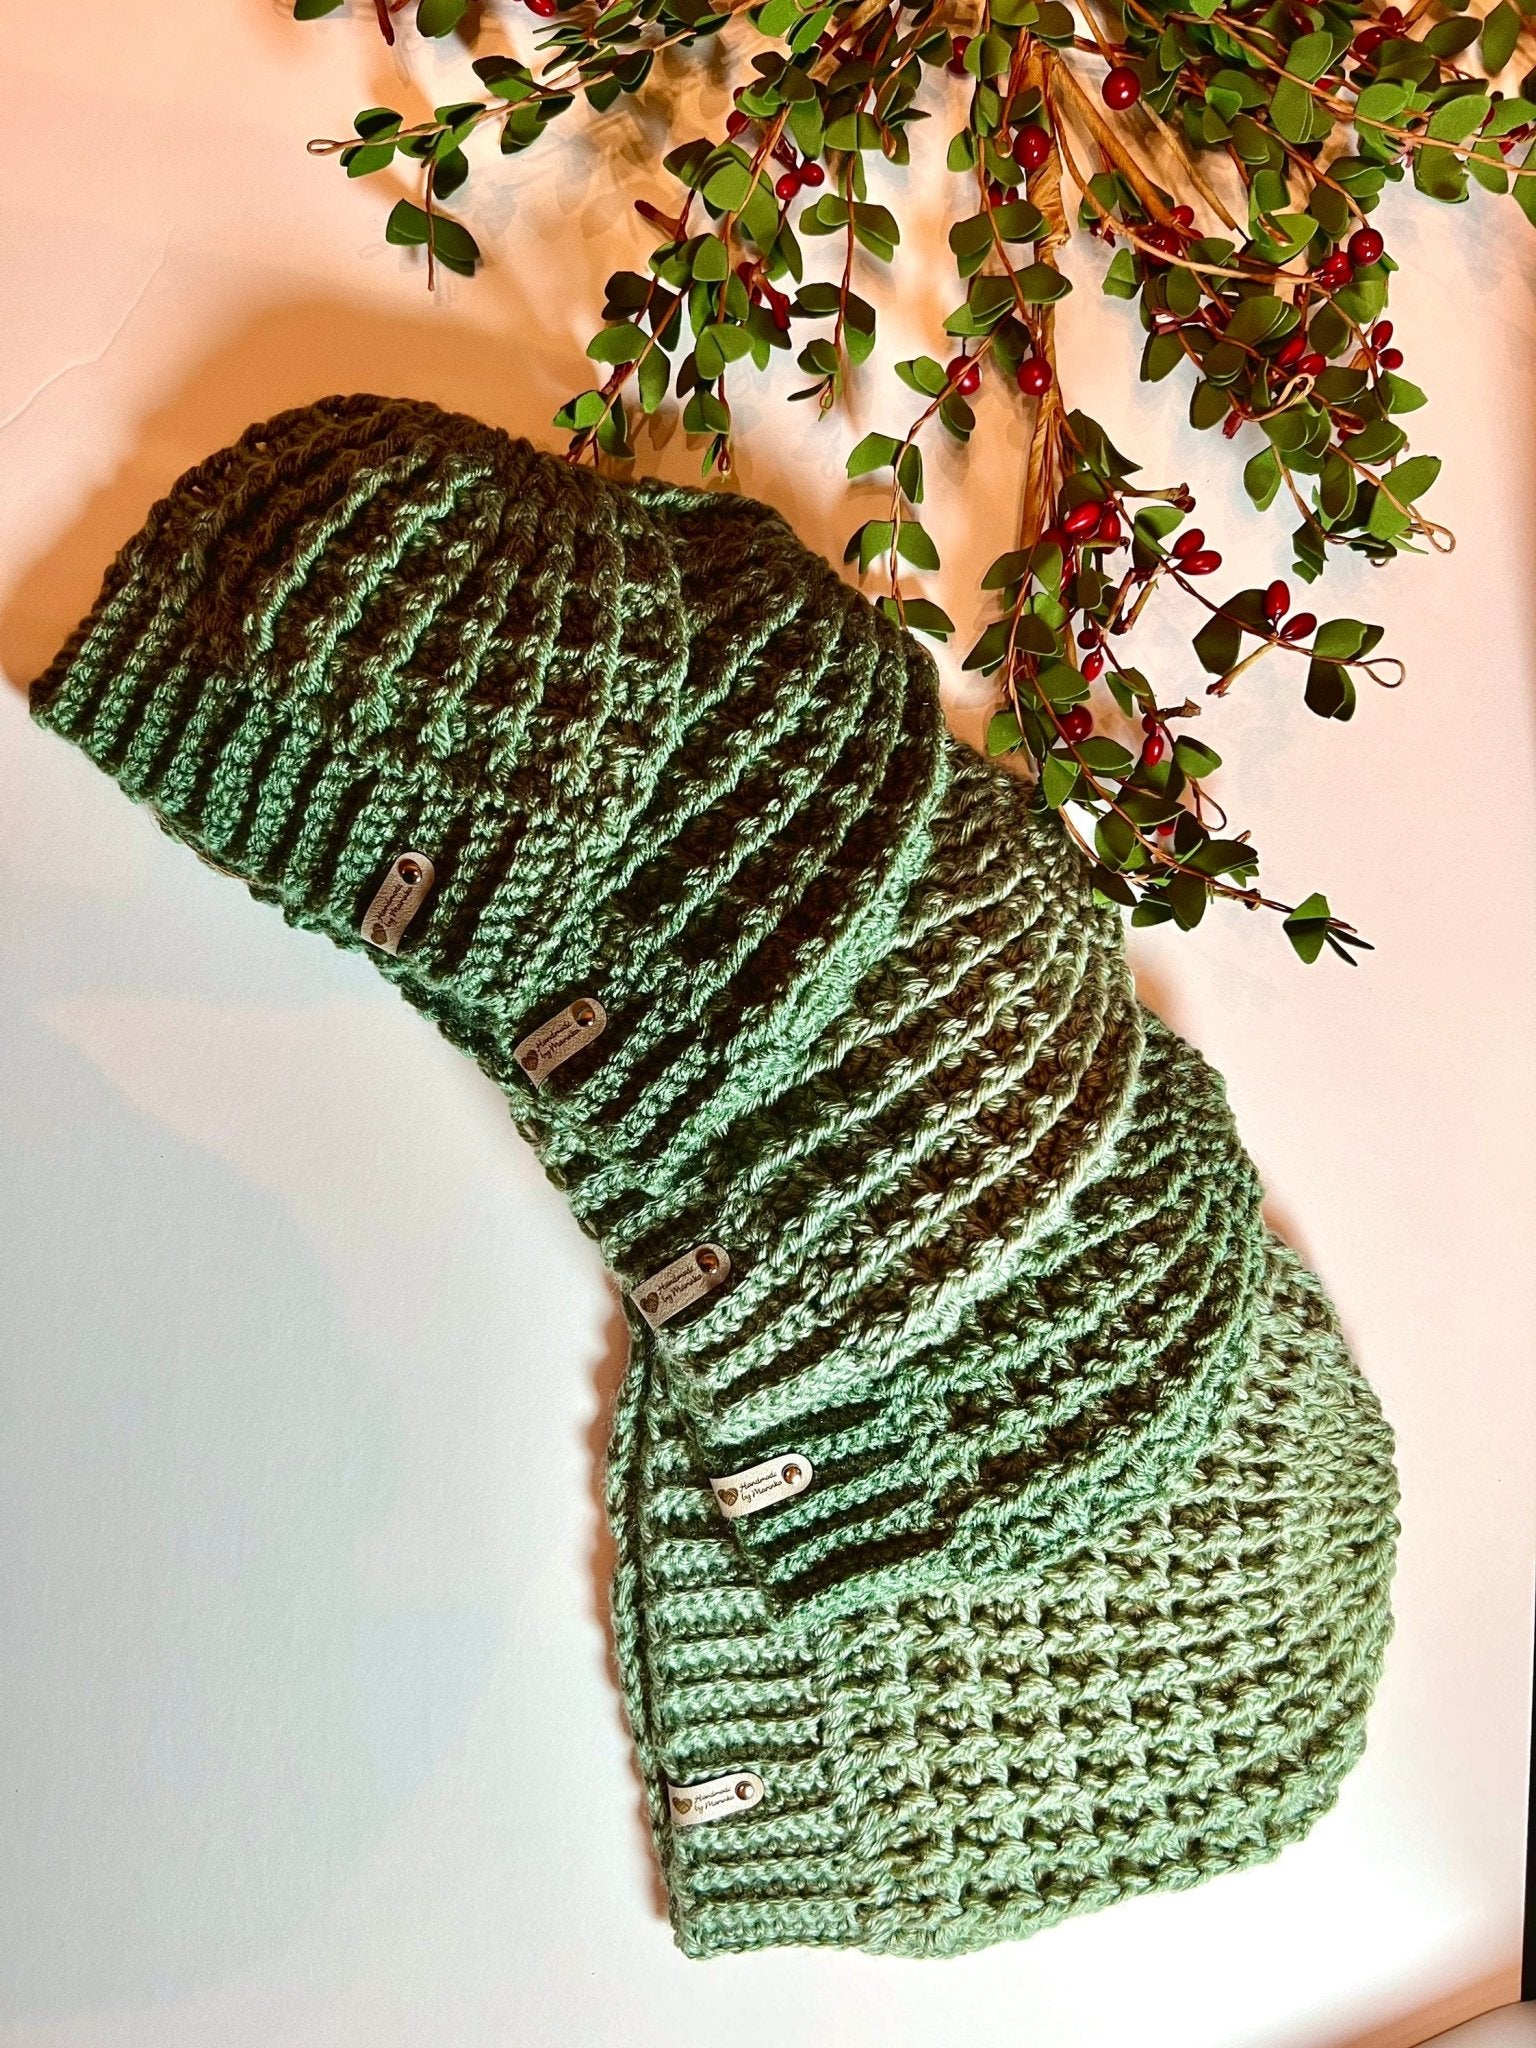 Handmade crochet hat, adult size, light sage green color - Lilly Grace Sparkle Boutique